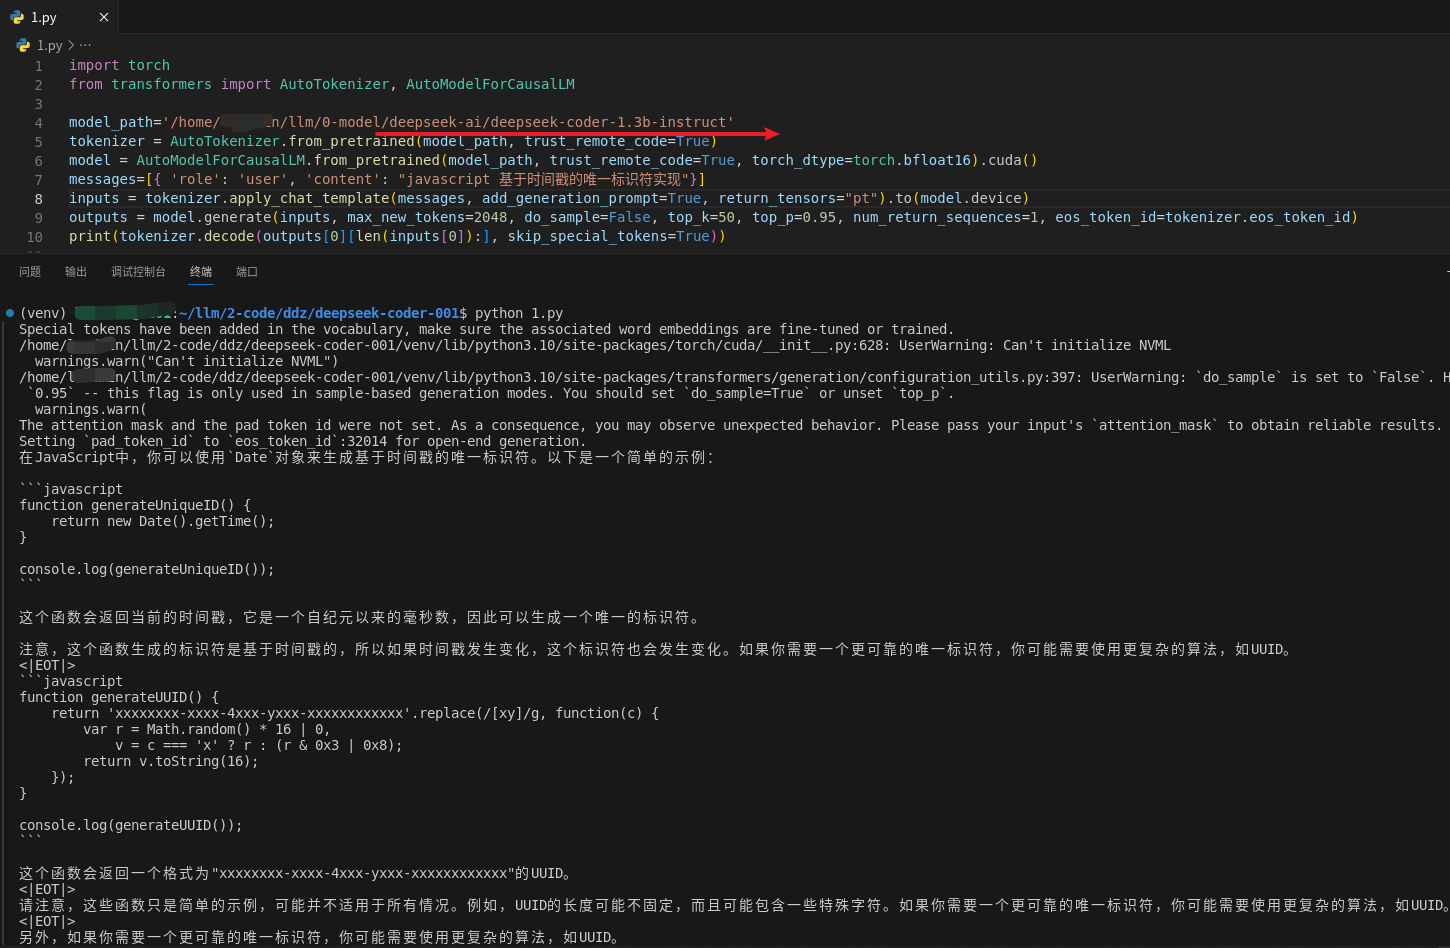 deepseek-coder-1.3b-instruct 推理：javascript 基于时间戳的唯一标识符实现